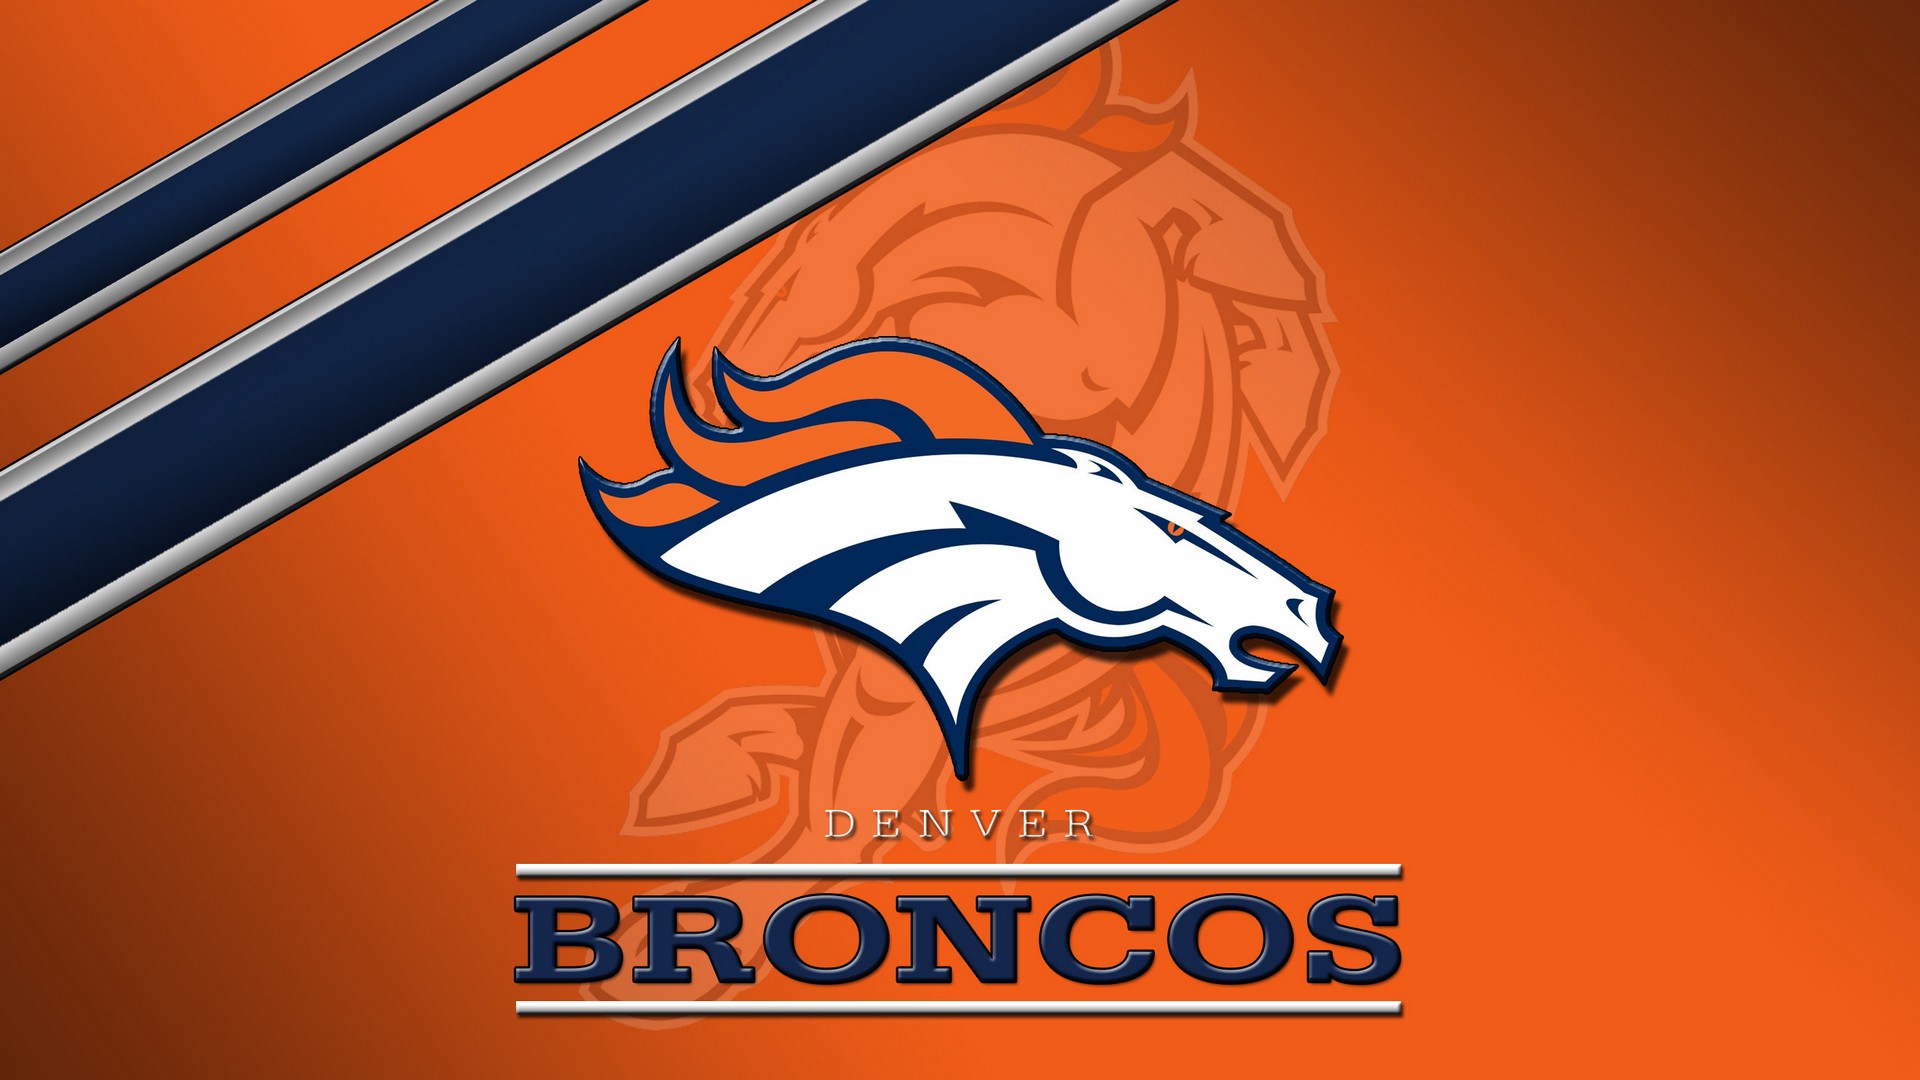 Denver Broncos Wallpaper HD With Resolution 1920X1080